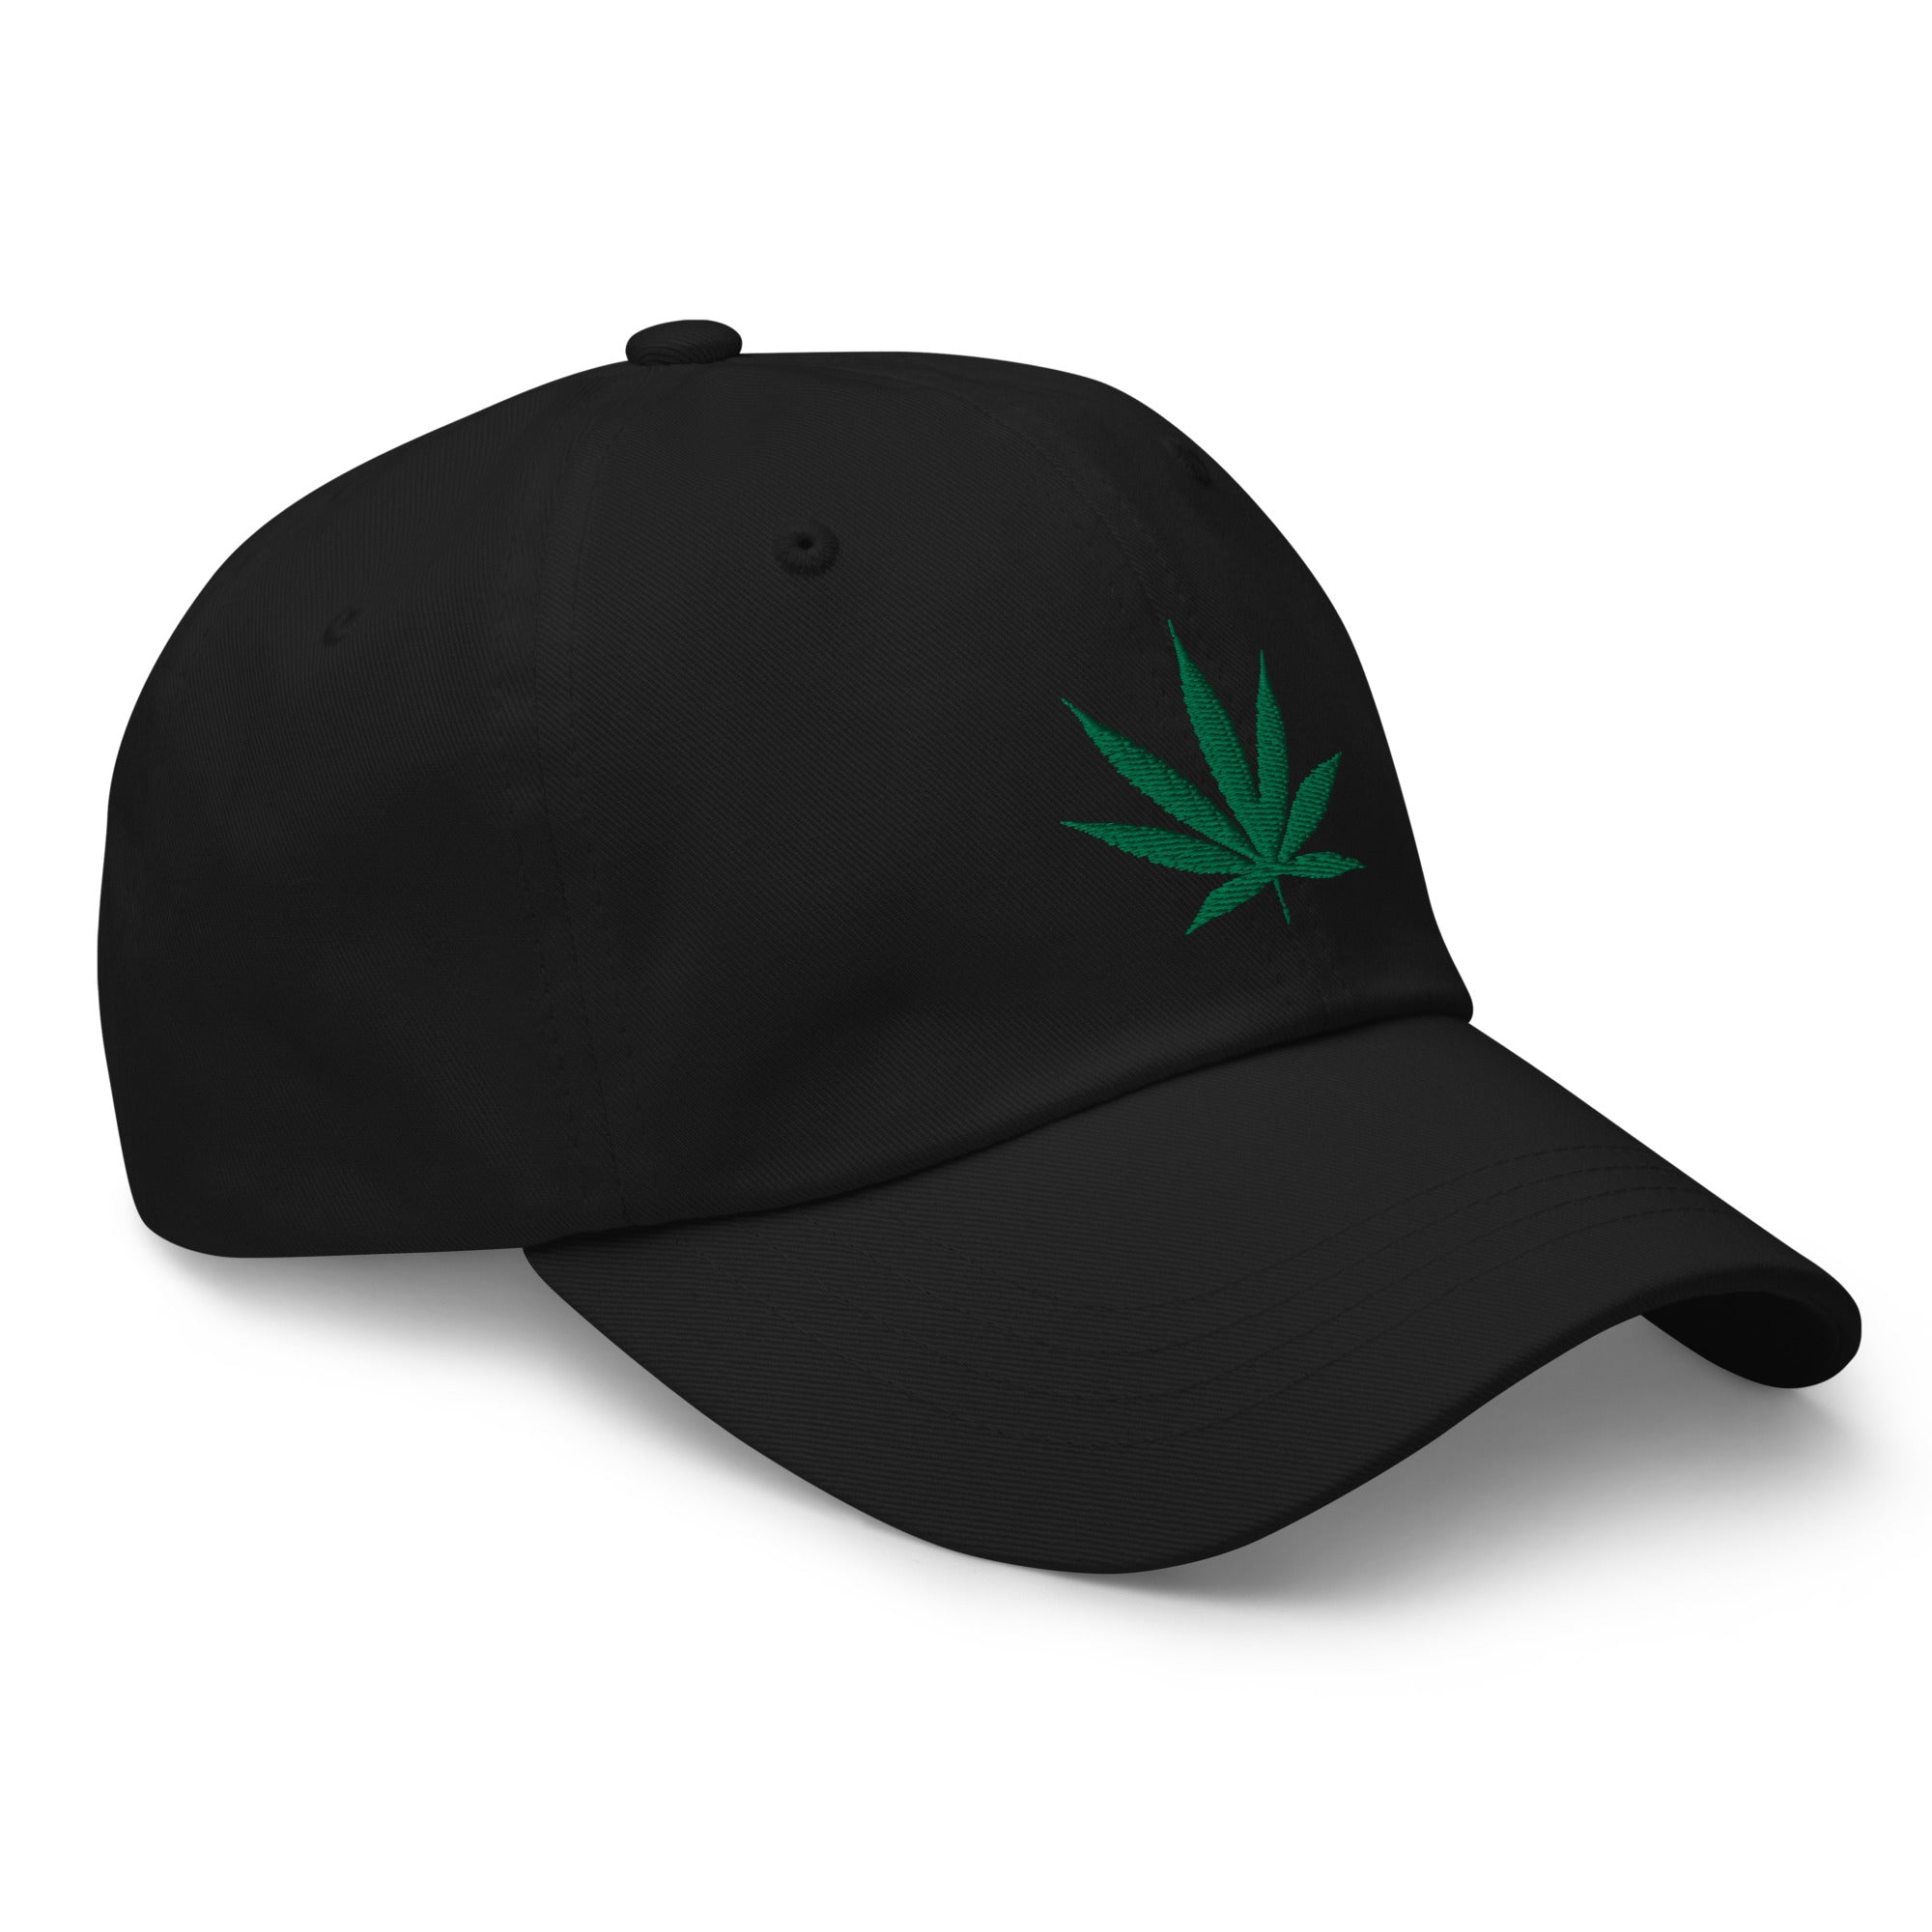 Pot Leaf Marijuana Embroidered Baseball Cap Dad hat - Edge of Life Designs